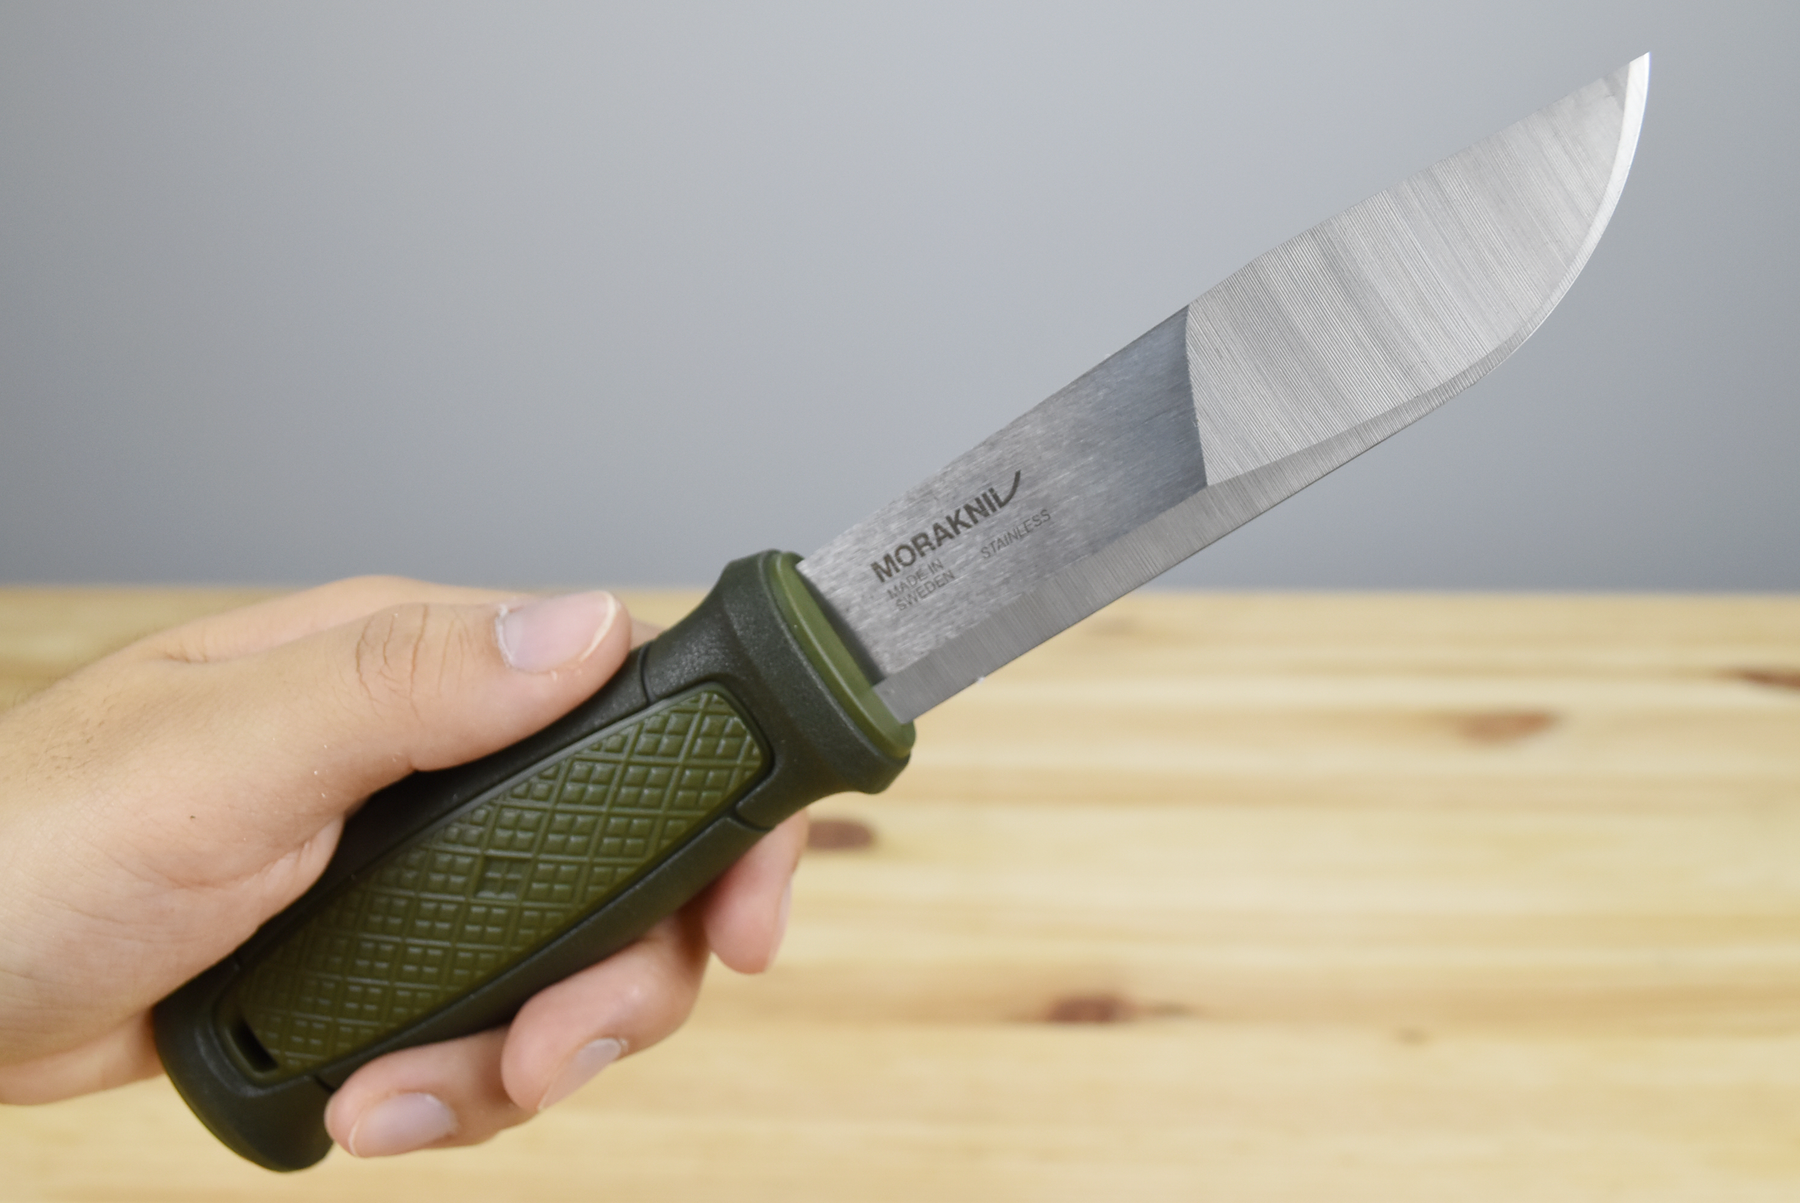 Kansbol Knife by Morakniv